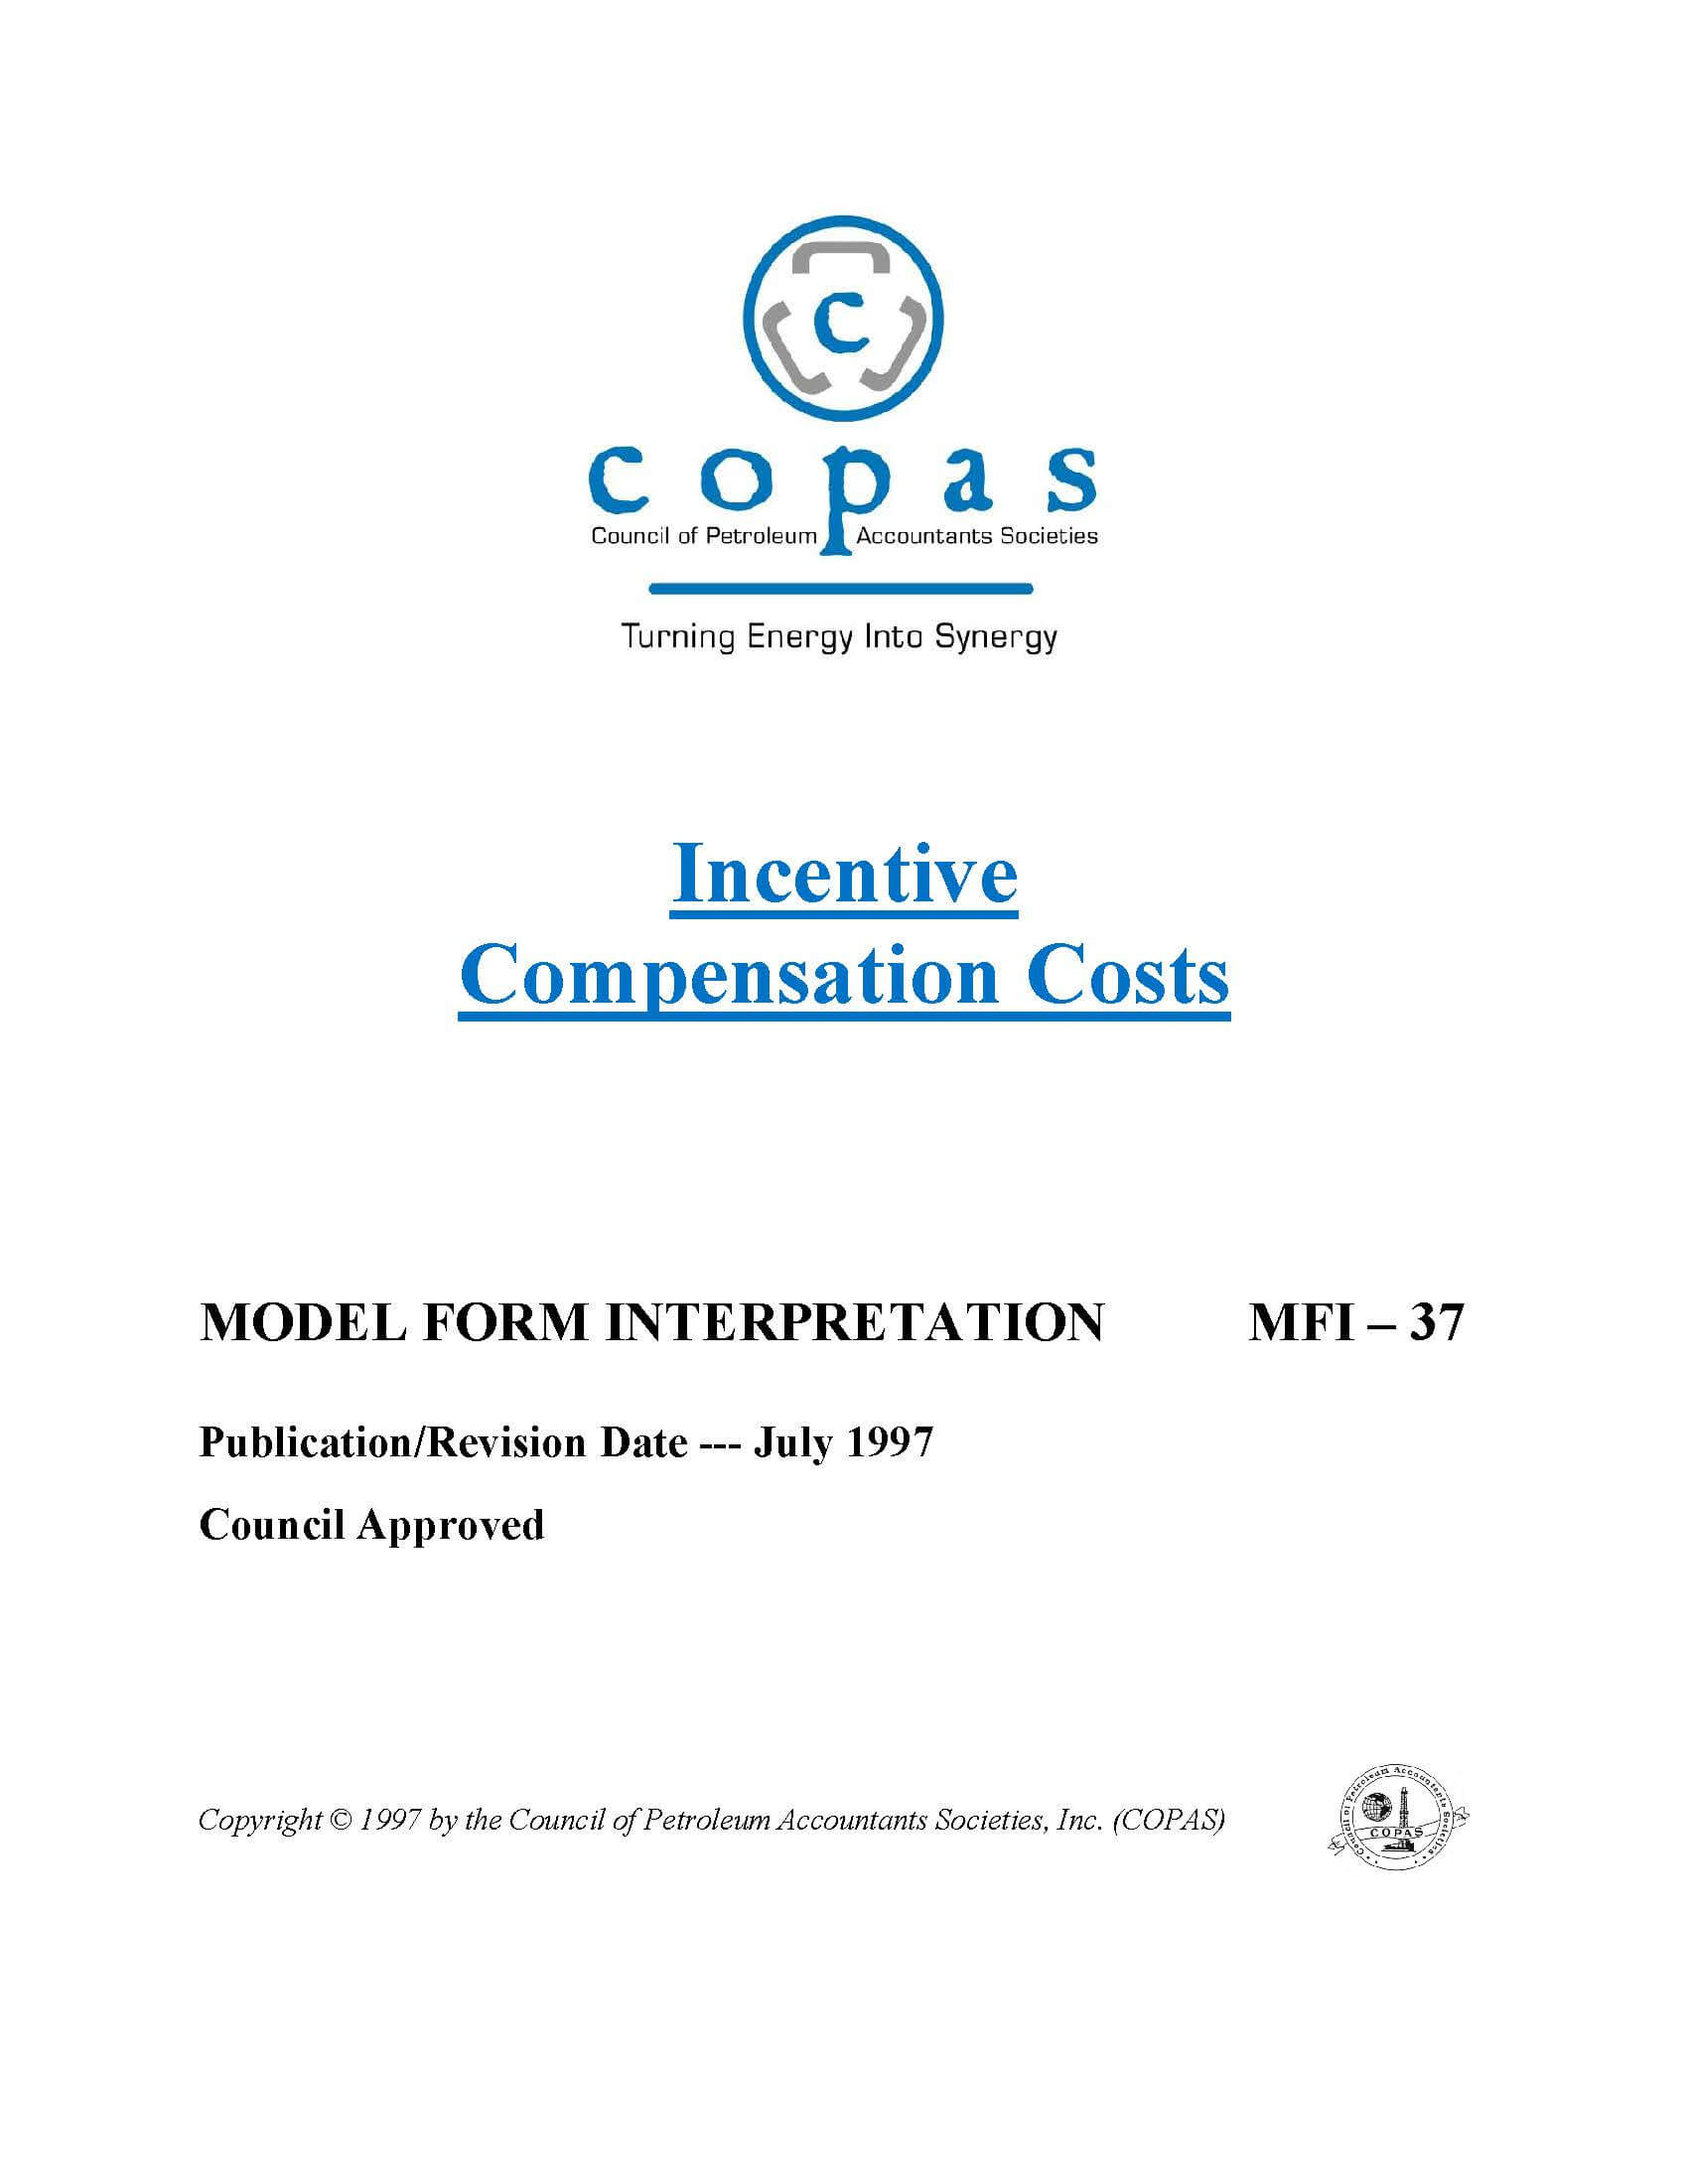 MFI-37 Incentive Compensation Costs